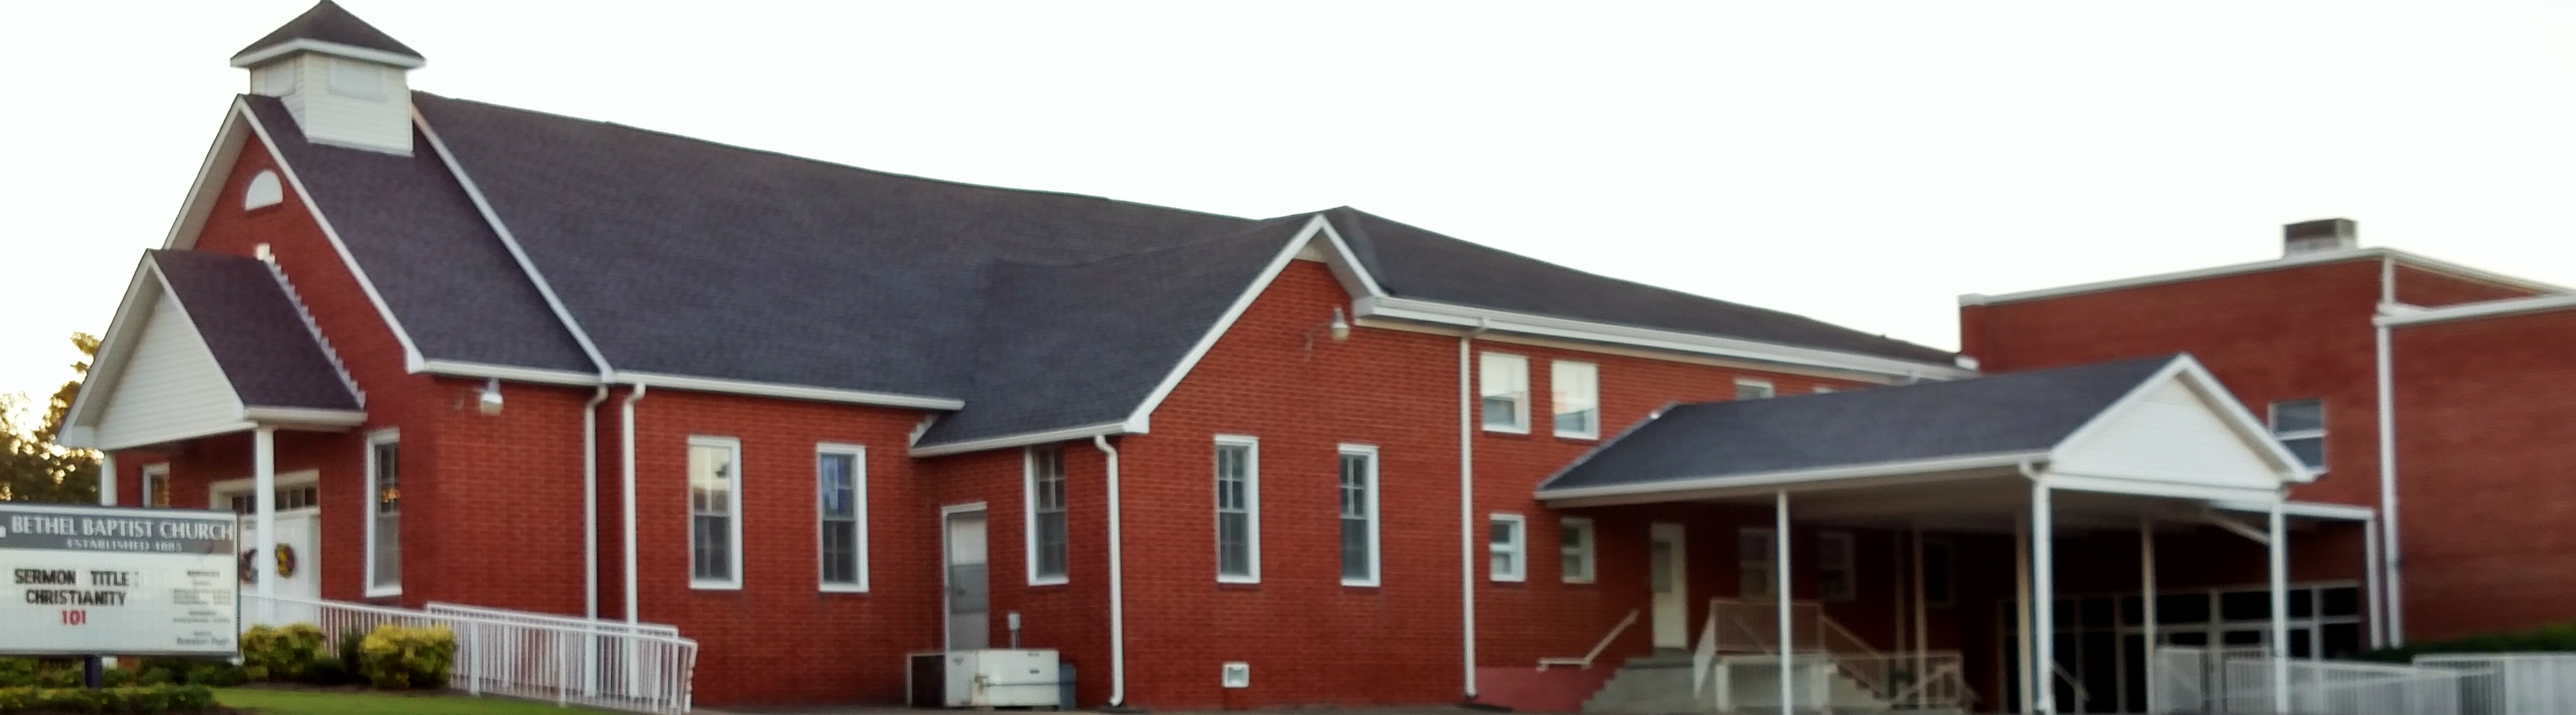 Bethel Baptist Church Page Banner Image